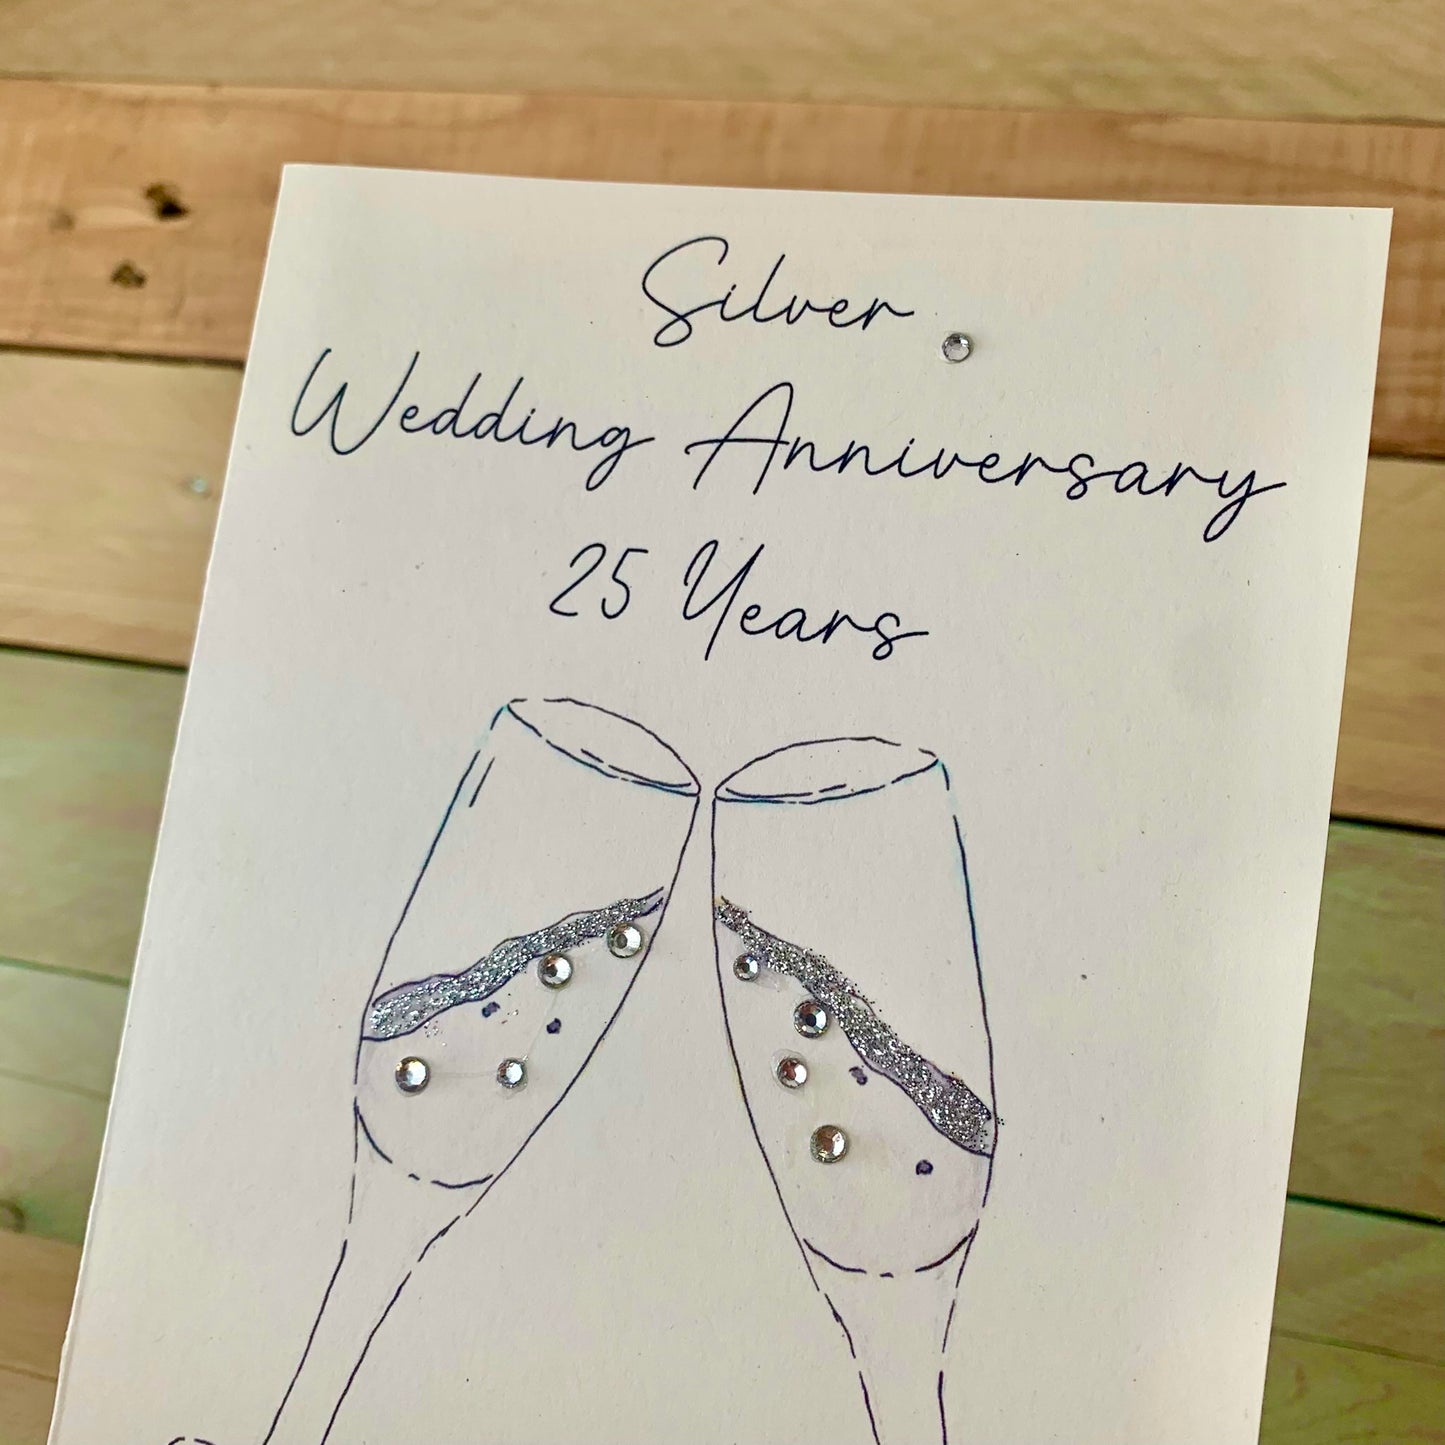 Silver Anniversary Champagne Card